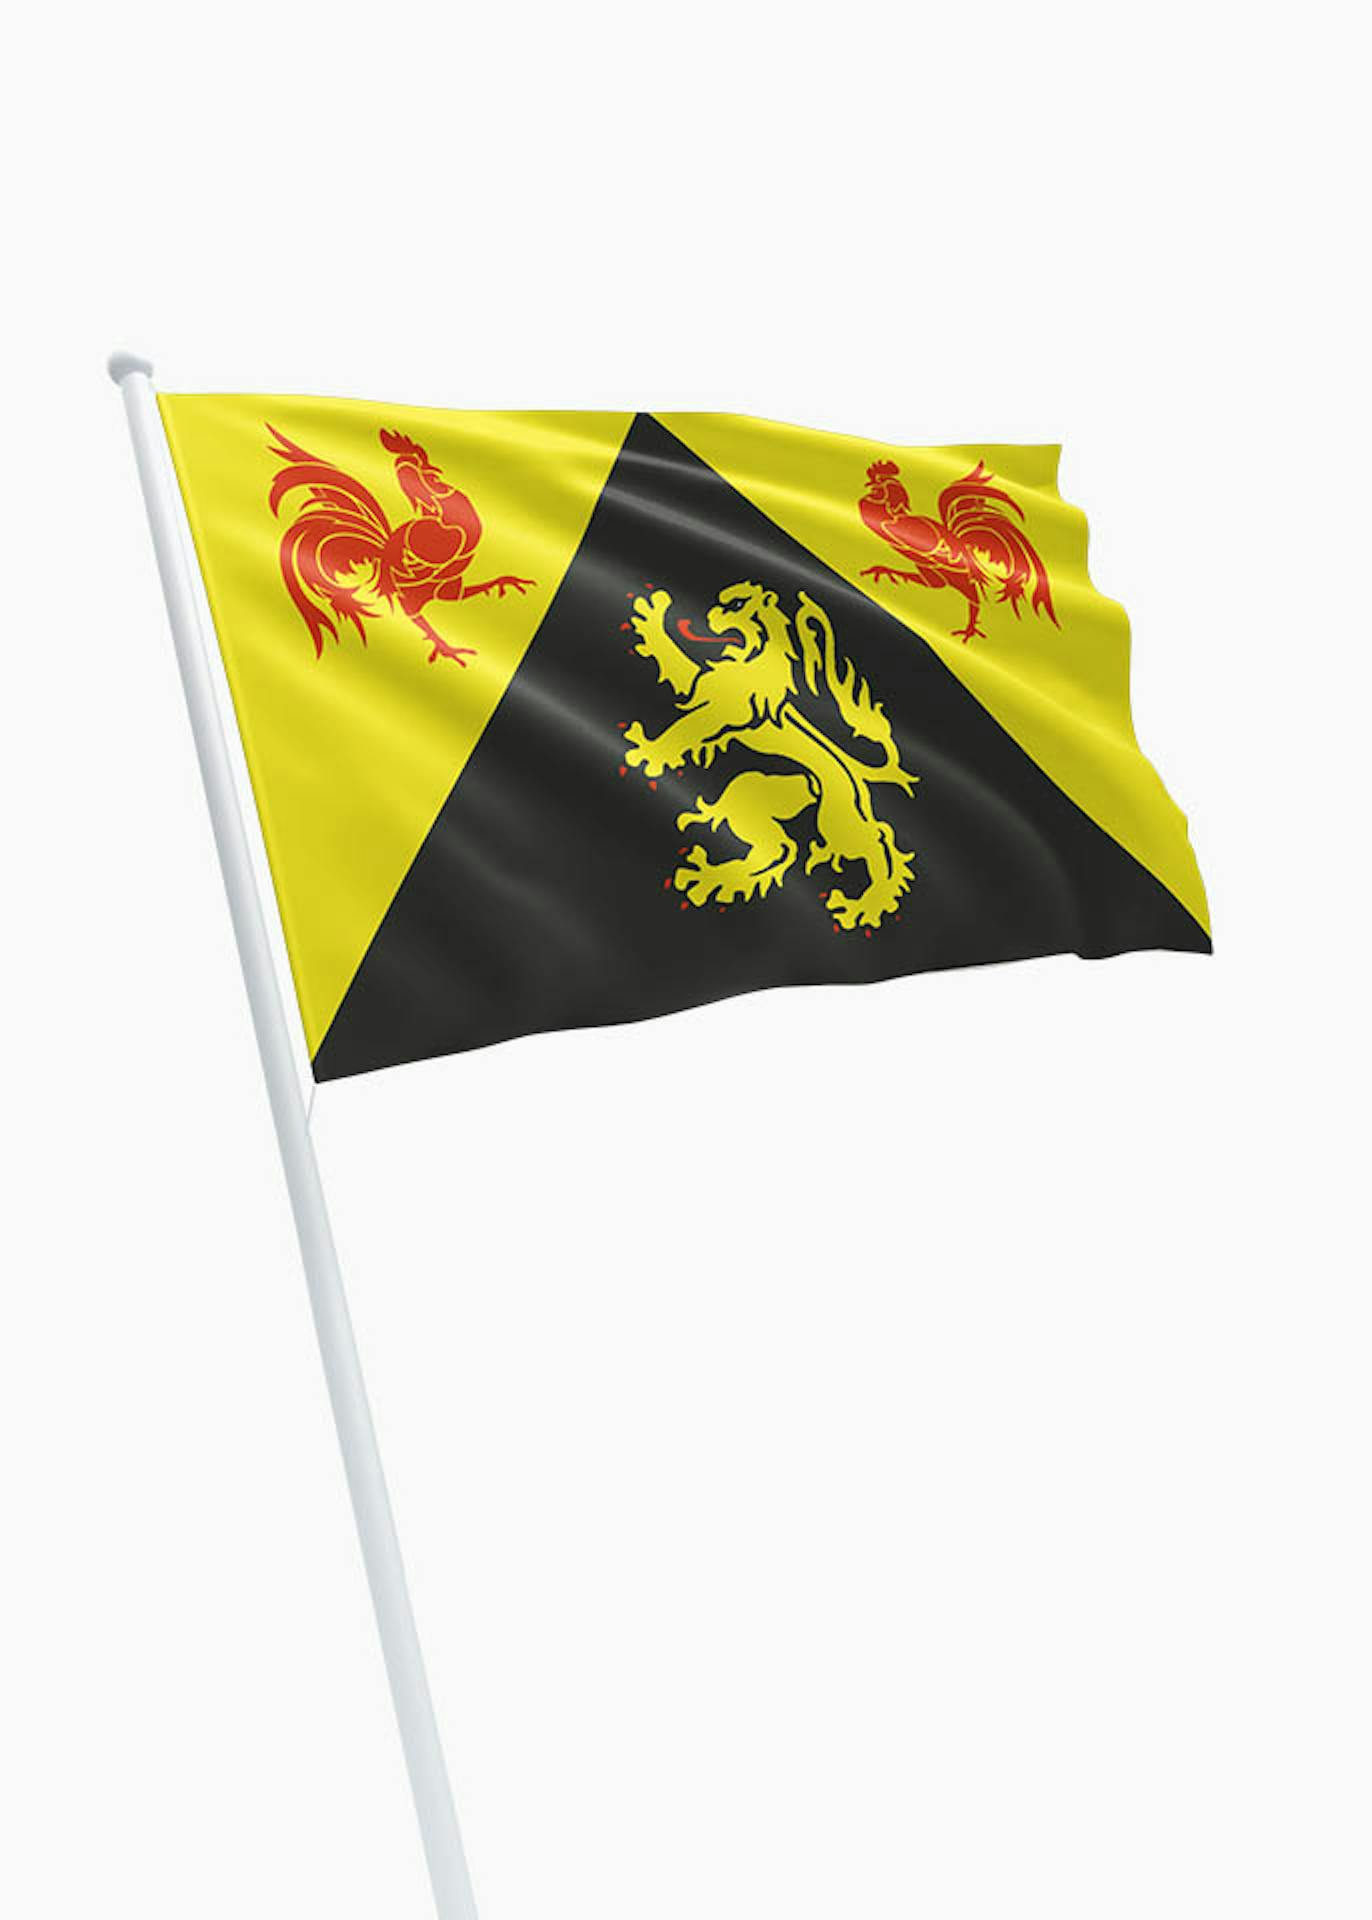 Vlag provincie Waals-Brabant kopen? Dé specialist vlaggen! - DVC